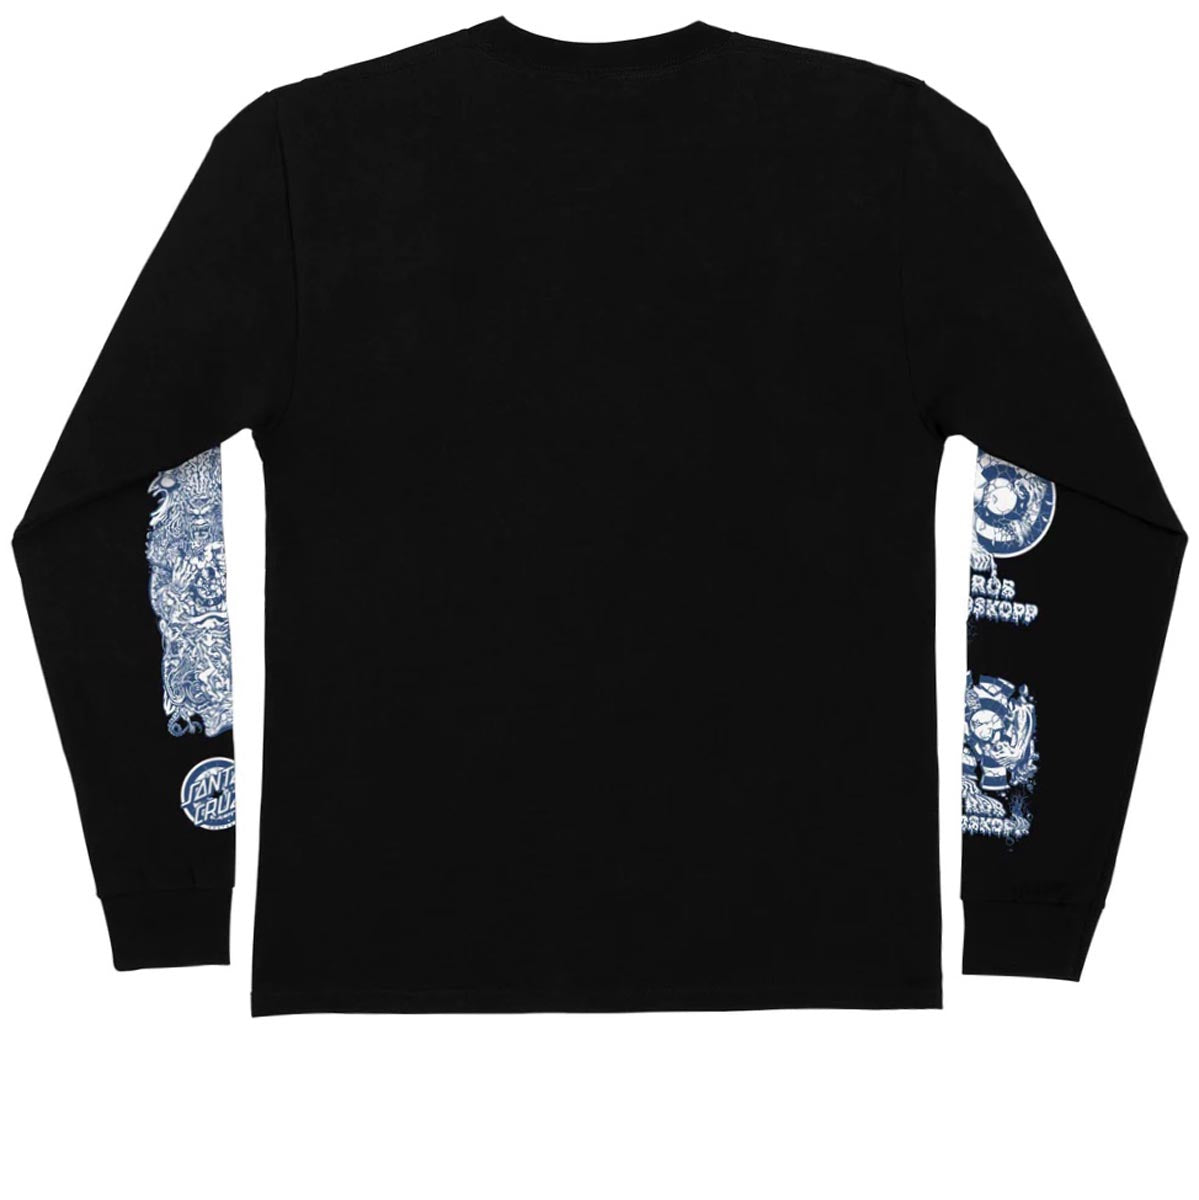 Santa Cruz Rob Evolution Long Sleeve T-Shirt - Black/Blue image 2